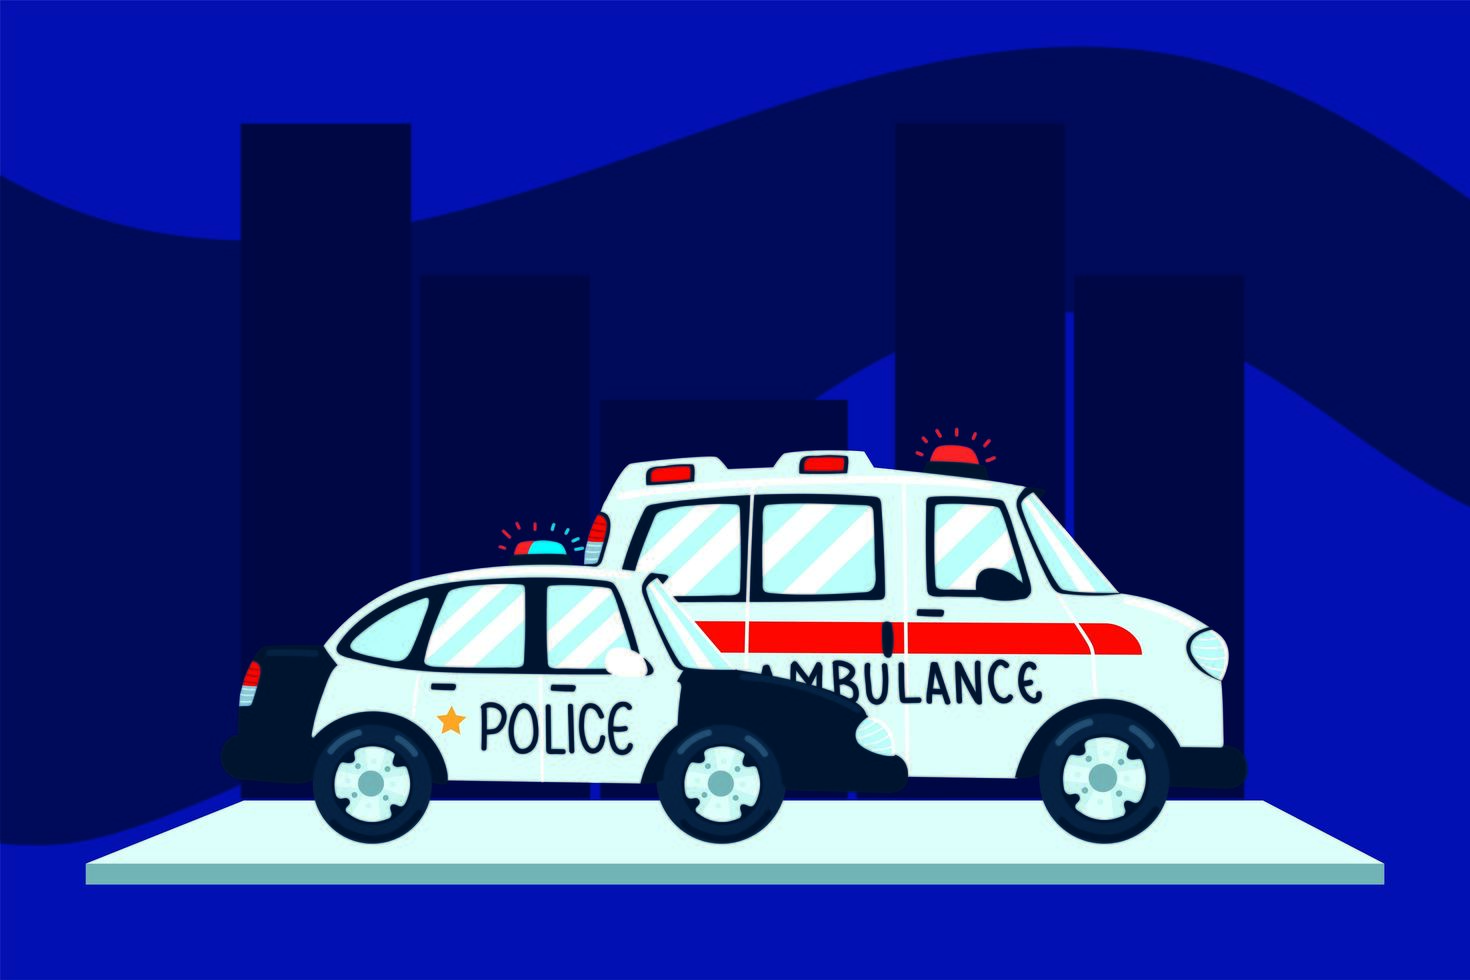 police car and ambulance vector